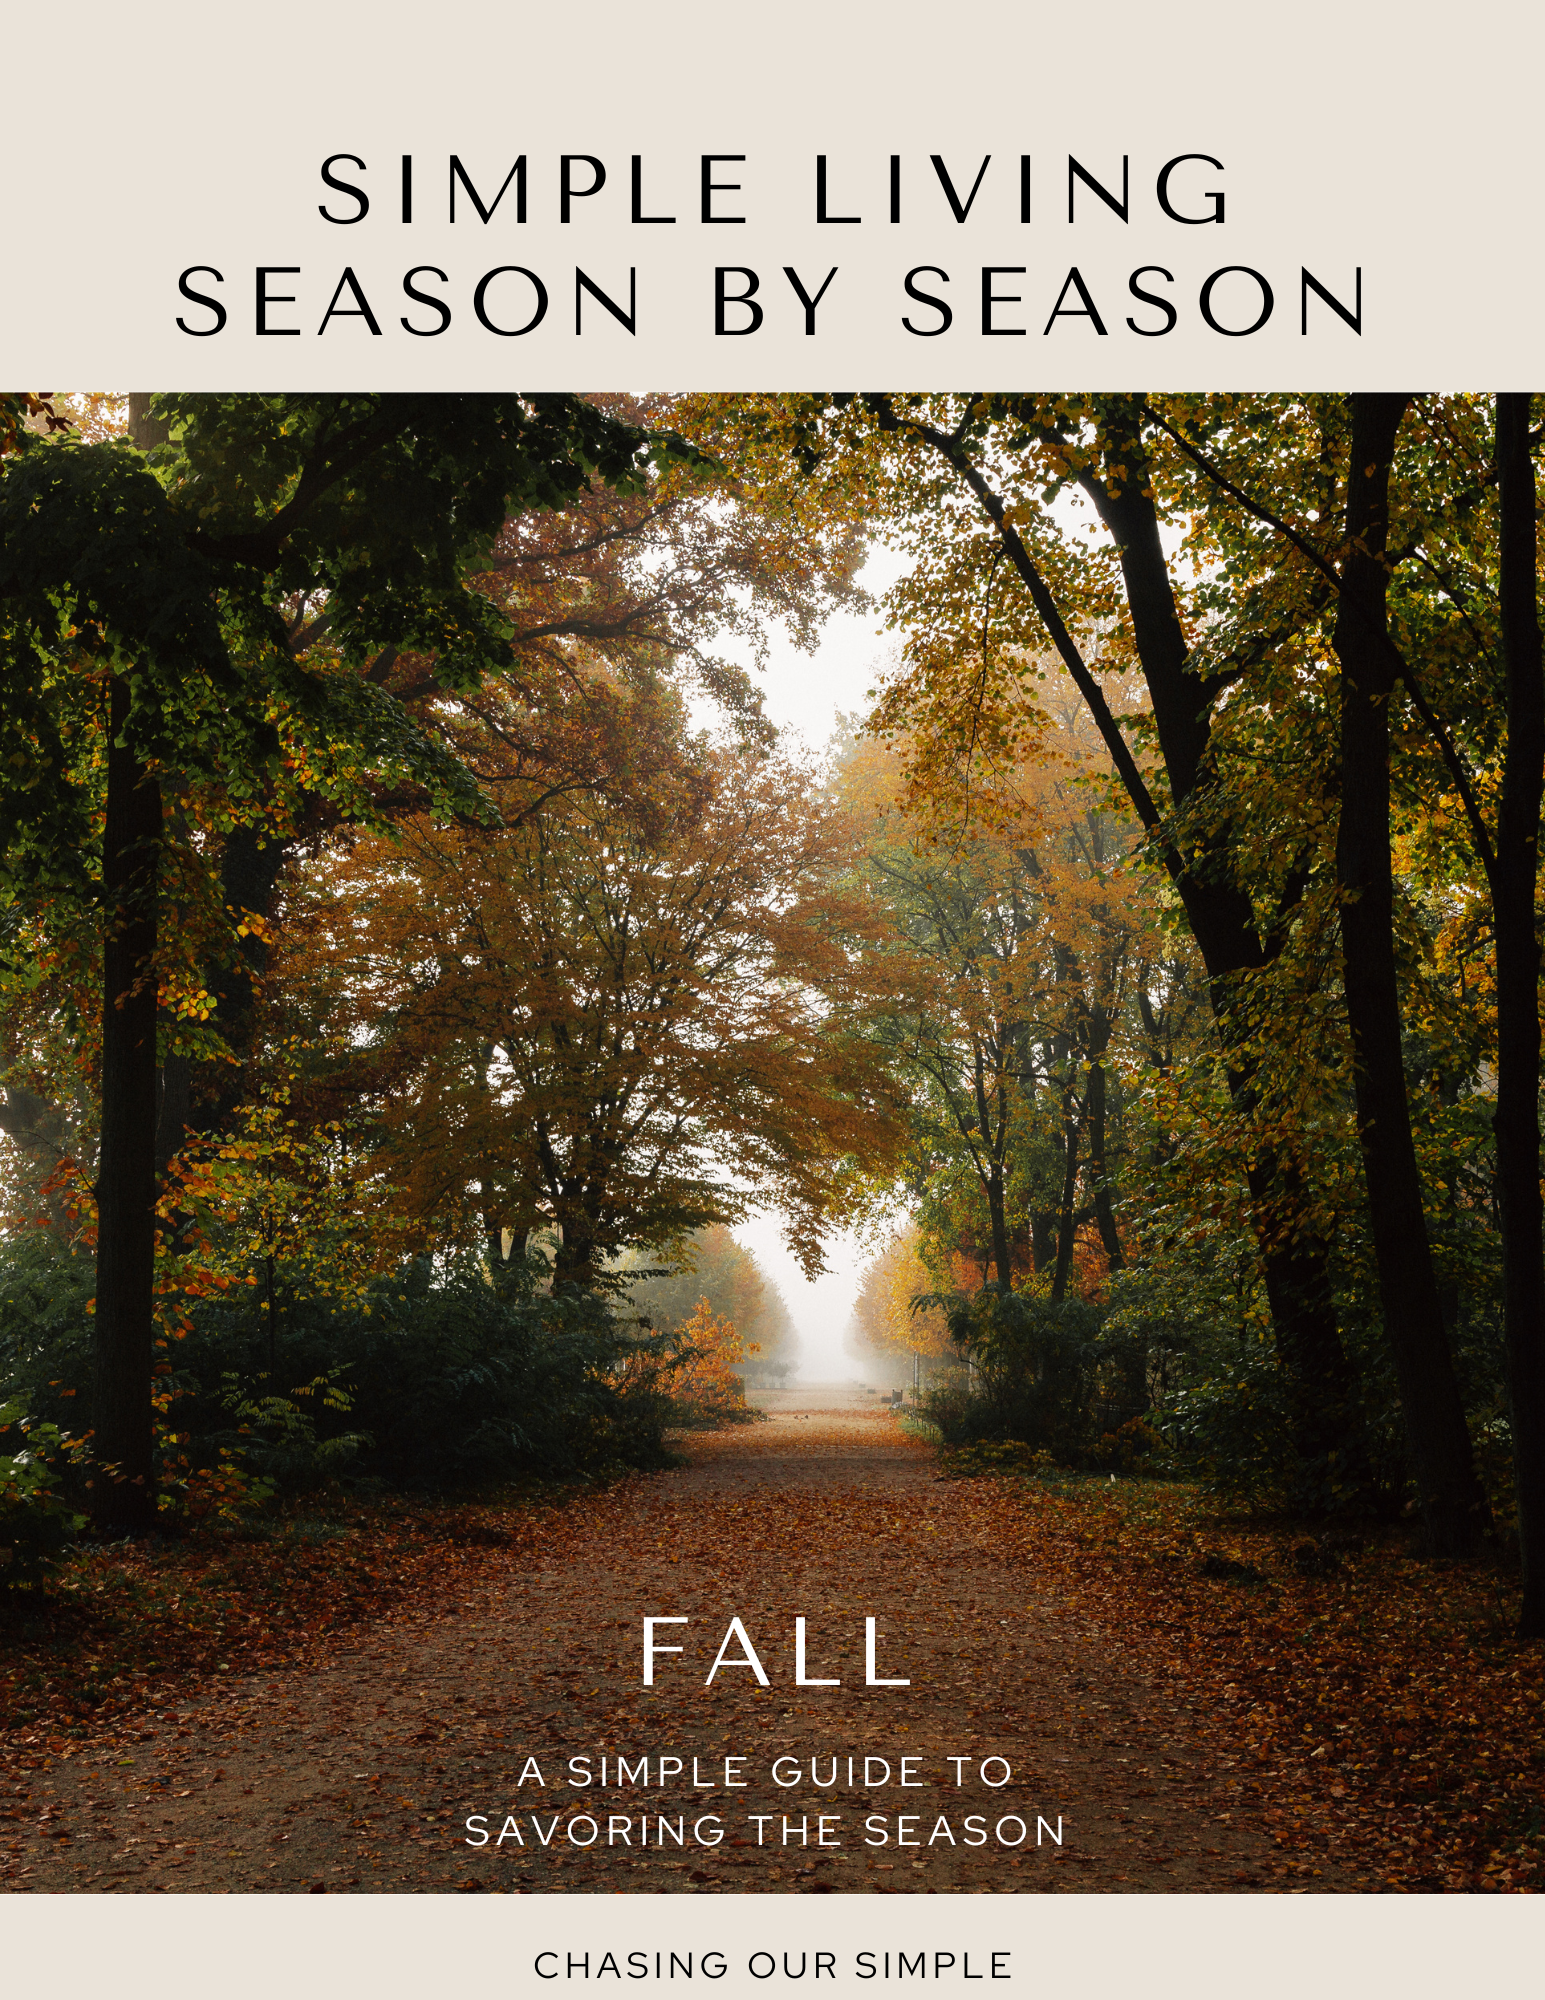 Simple Living Season by Season: Fall